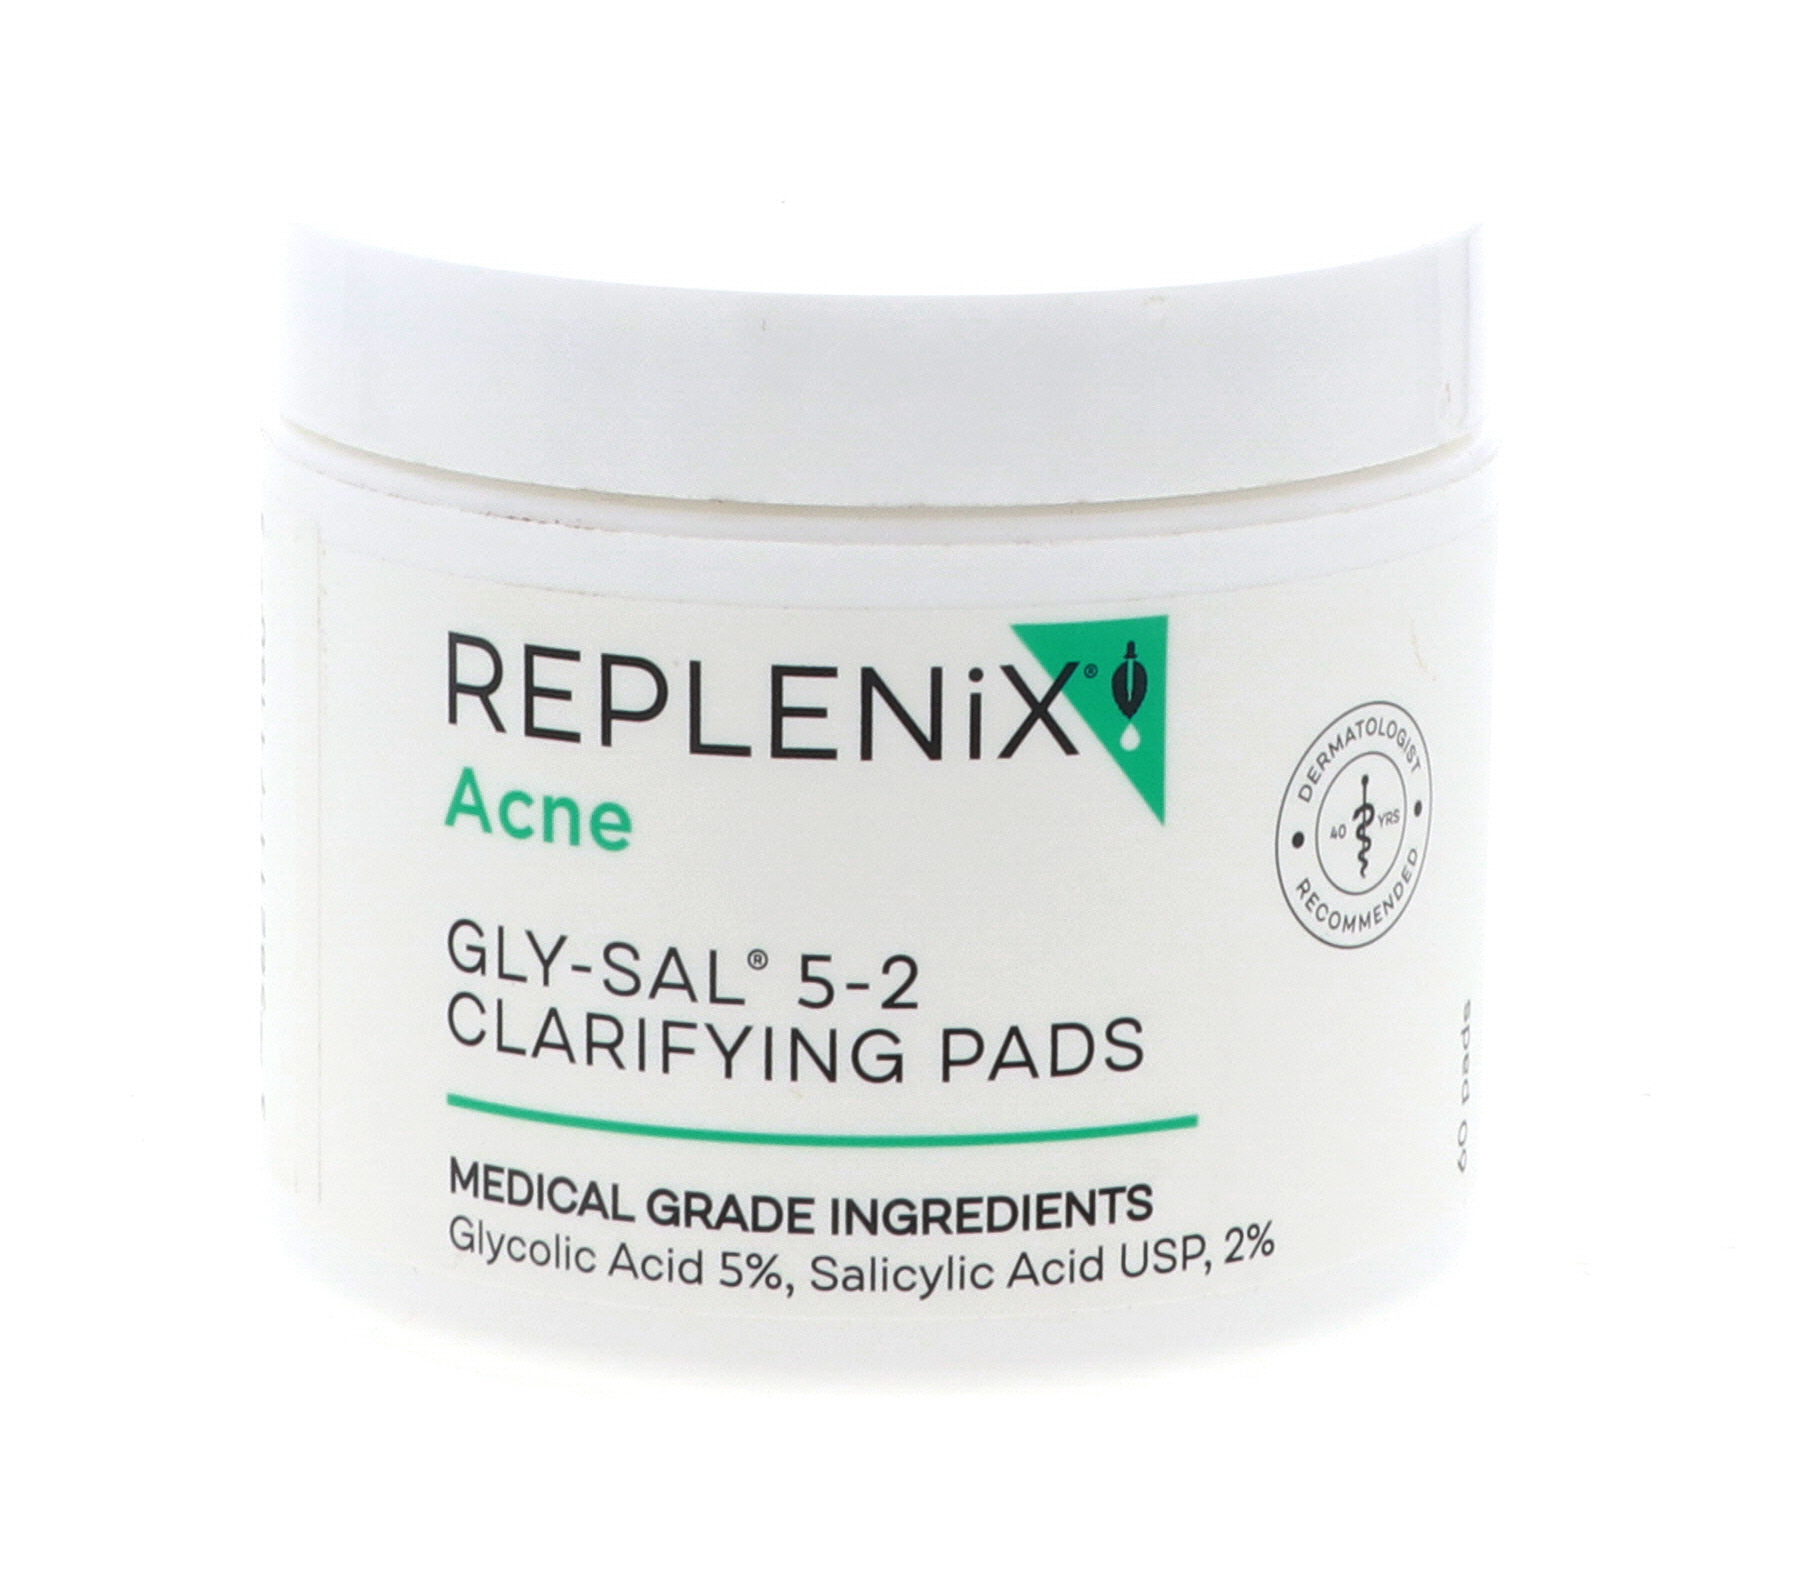 Replenix Gly-Sal 5-2 Clarifying Pads, 60 pads - image 1 of 4